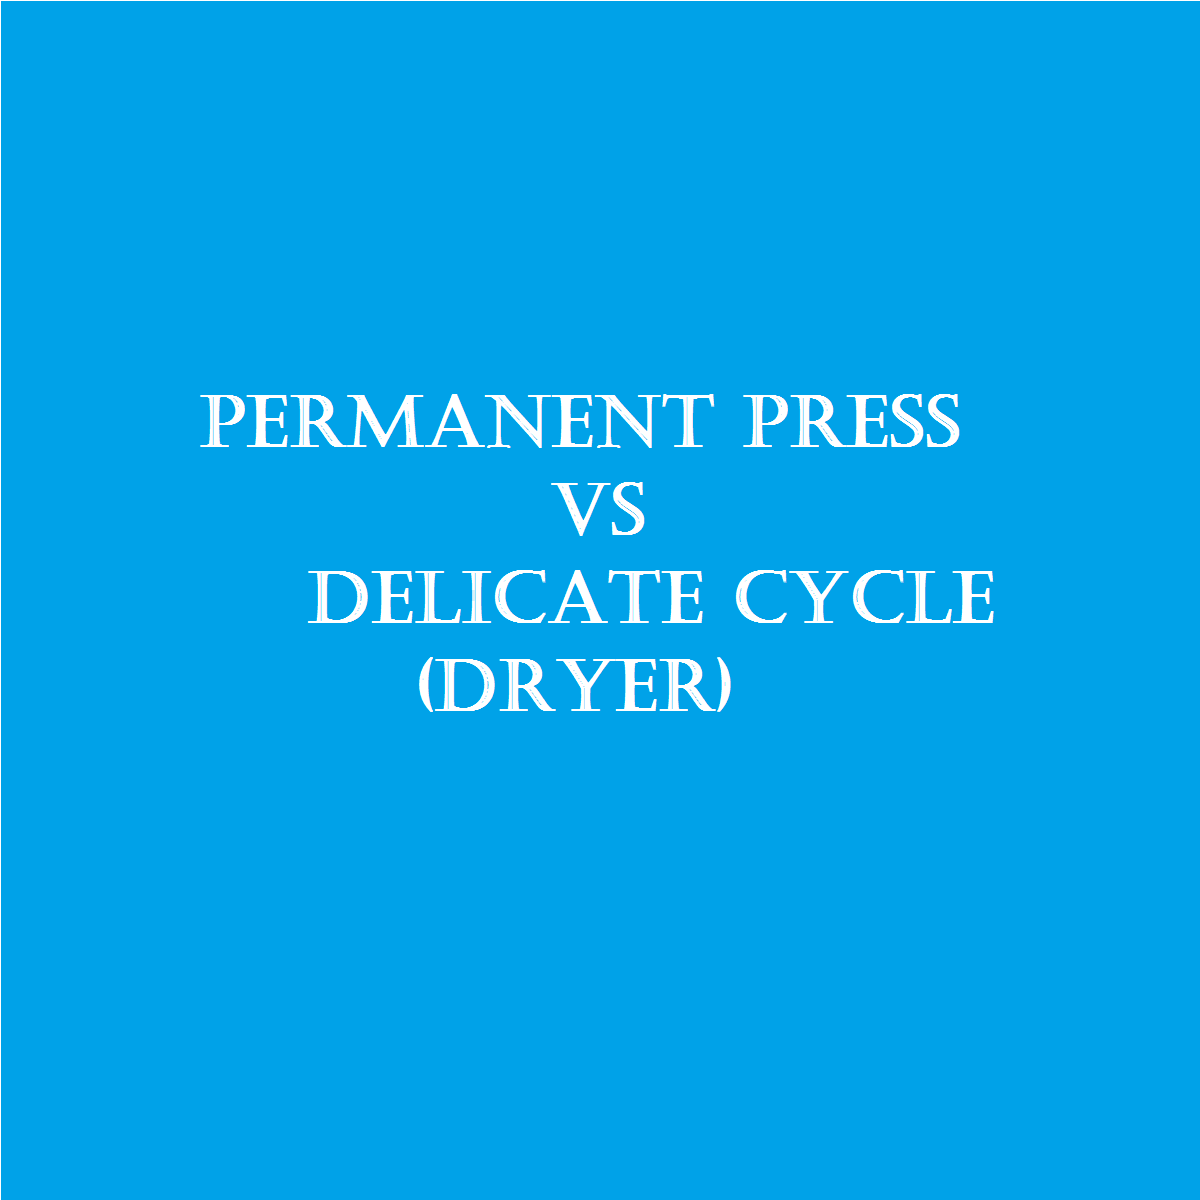 Permanent press vs delicate dryer